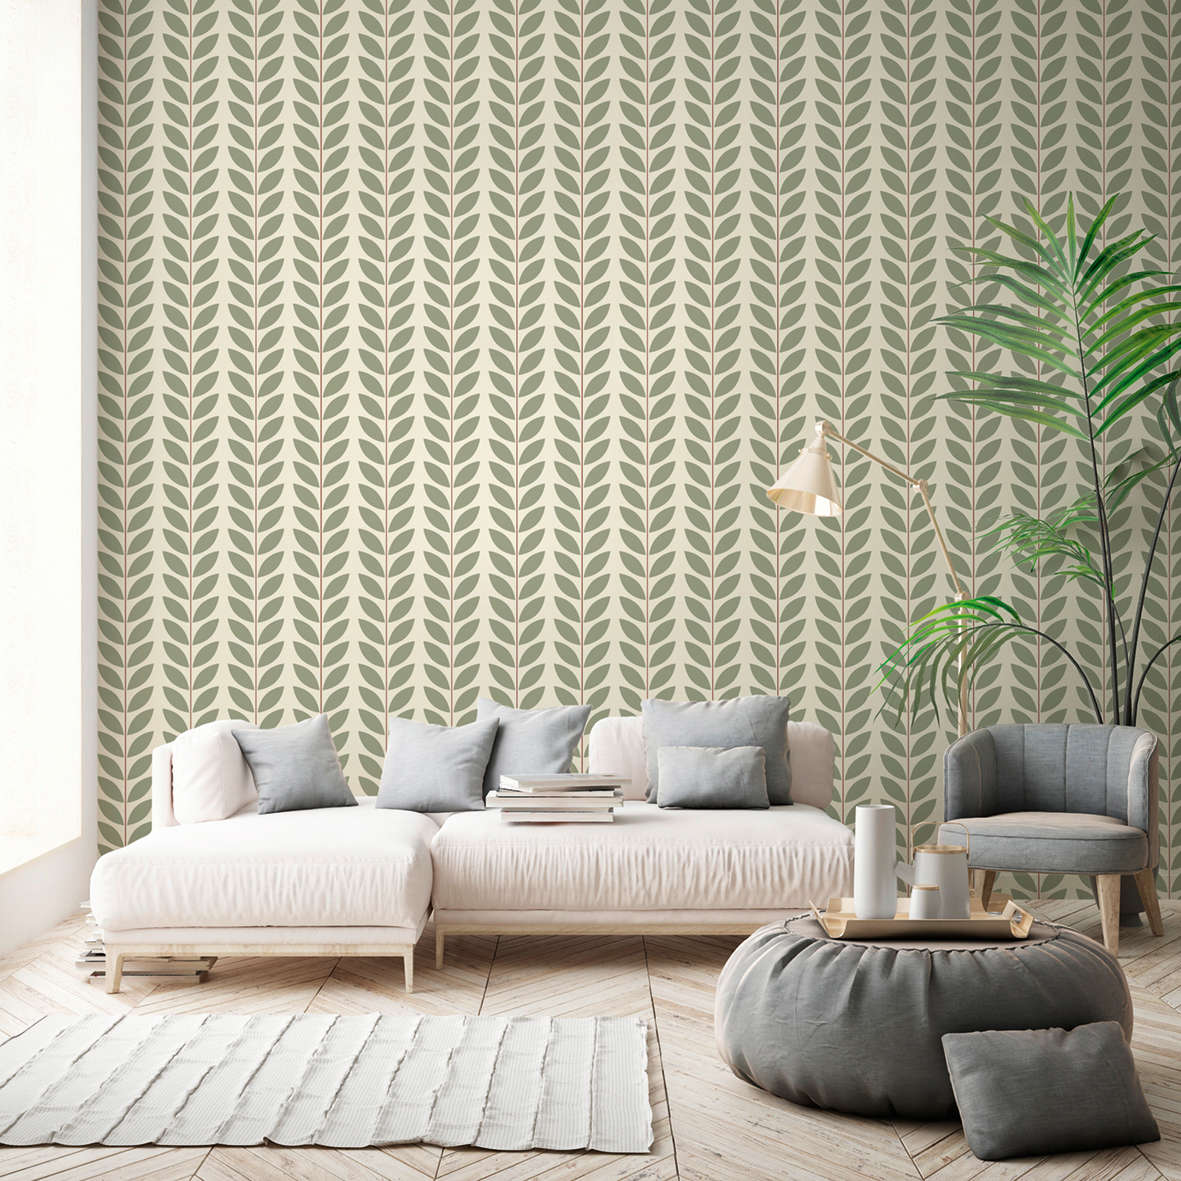             Leaf pattern non-woven wallpaper in retro look - beige, green, red
        